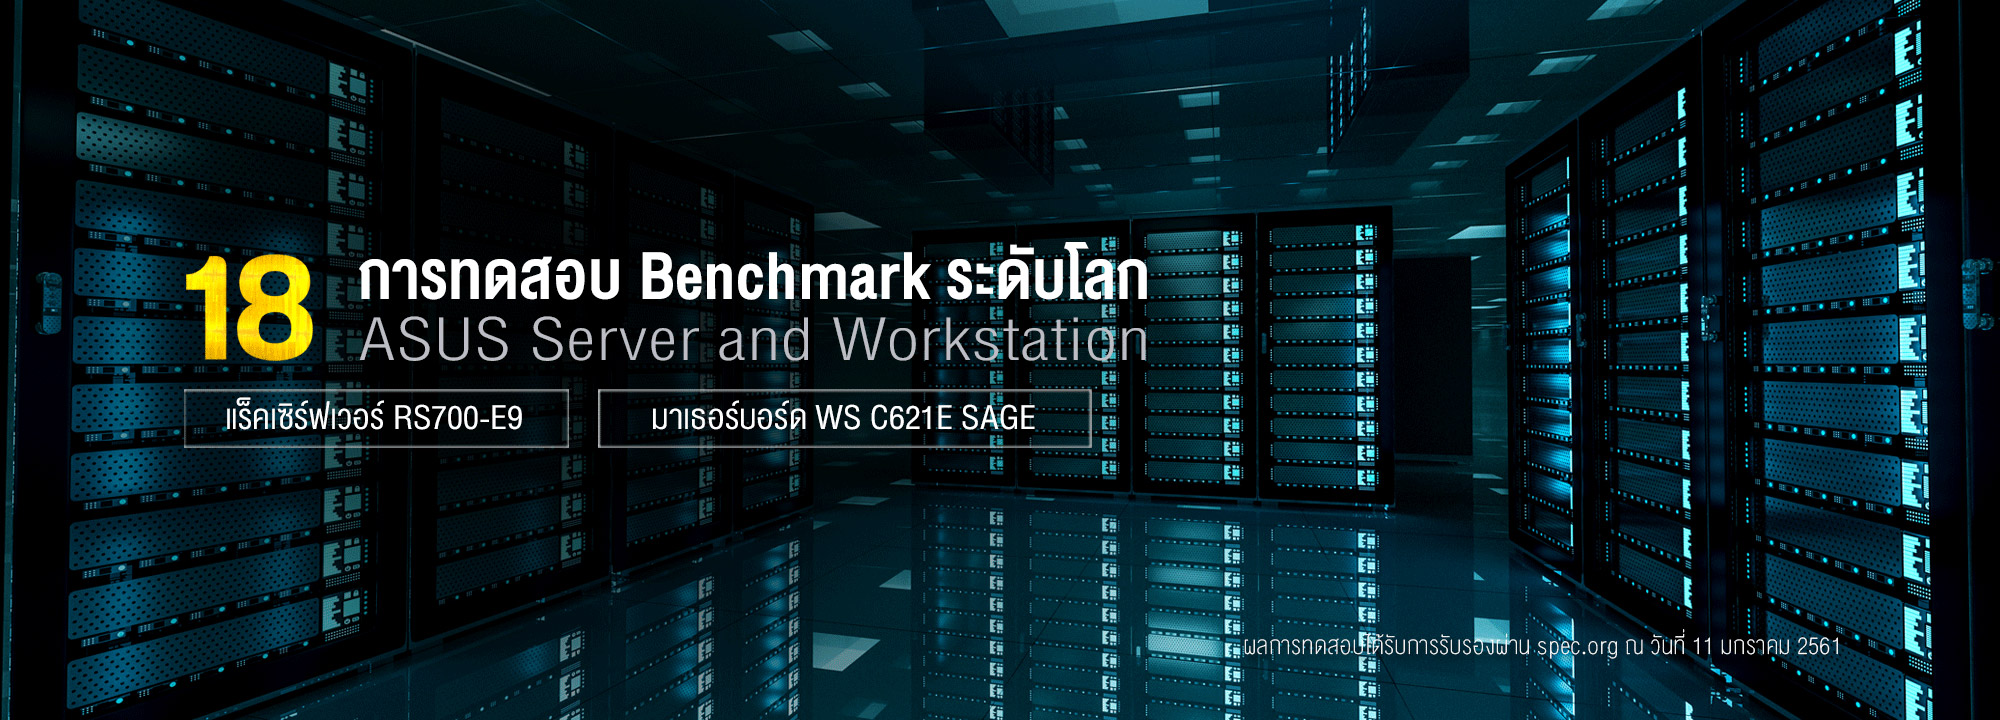 asus server workstation spec world record 2000x720x jpg ASUS เซิร์ฟเวอร์และมาเธอร์บอร์ดเวิร์คสเตชั่นที่ได้รับ 18 การทดสอบ Benchmark ระดับโลก